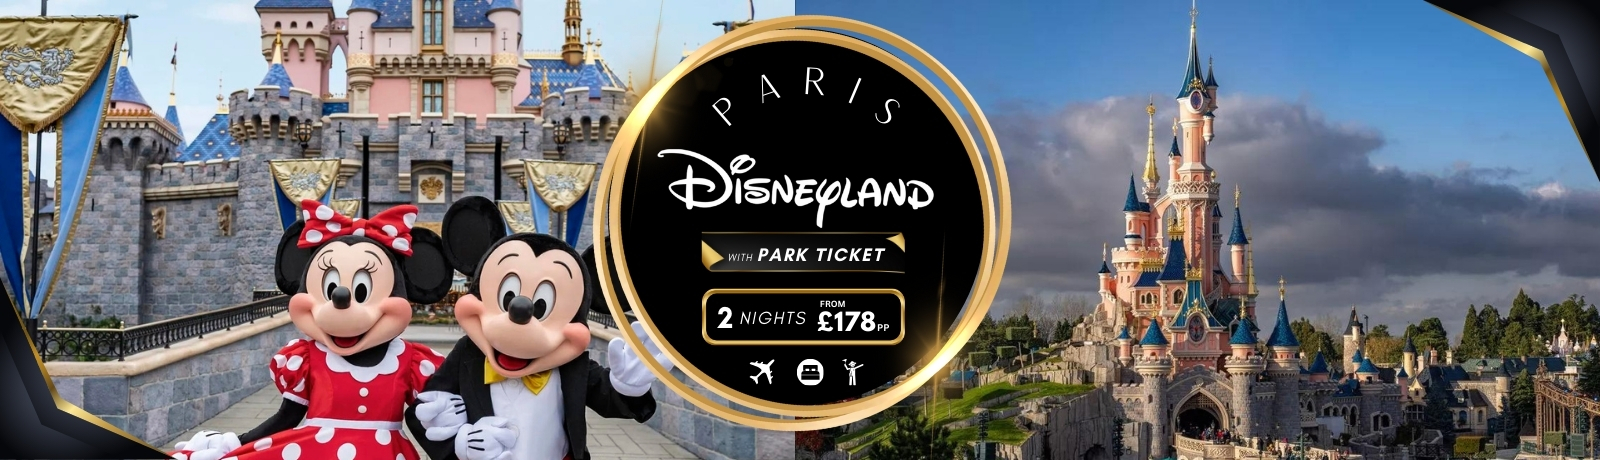 Disneyland With Park Ticket